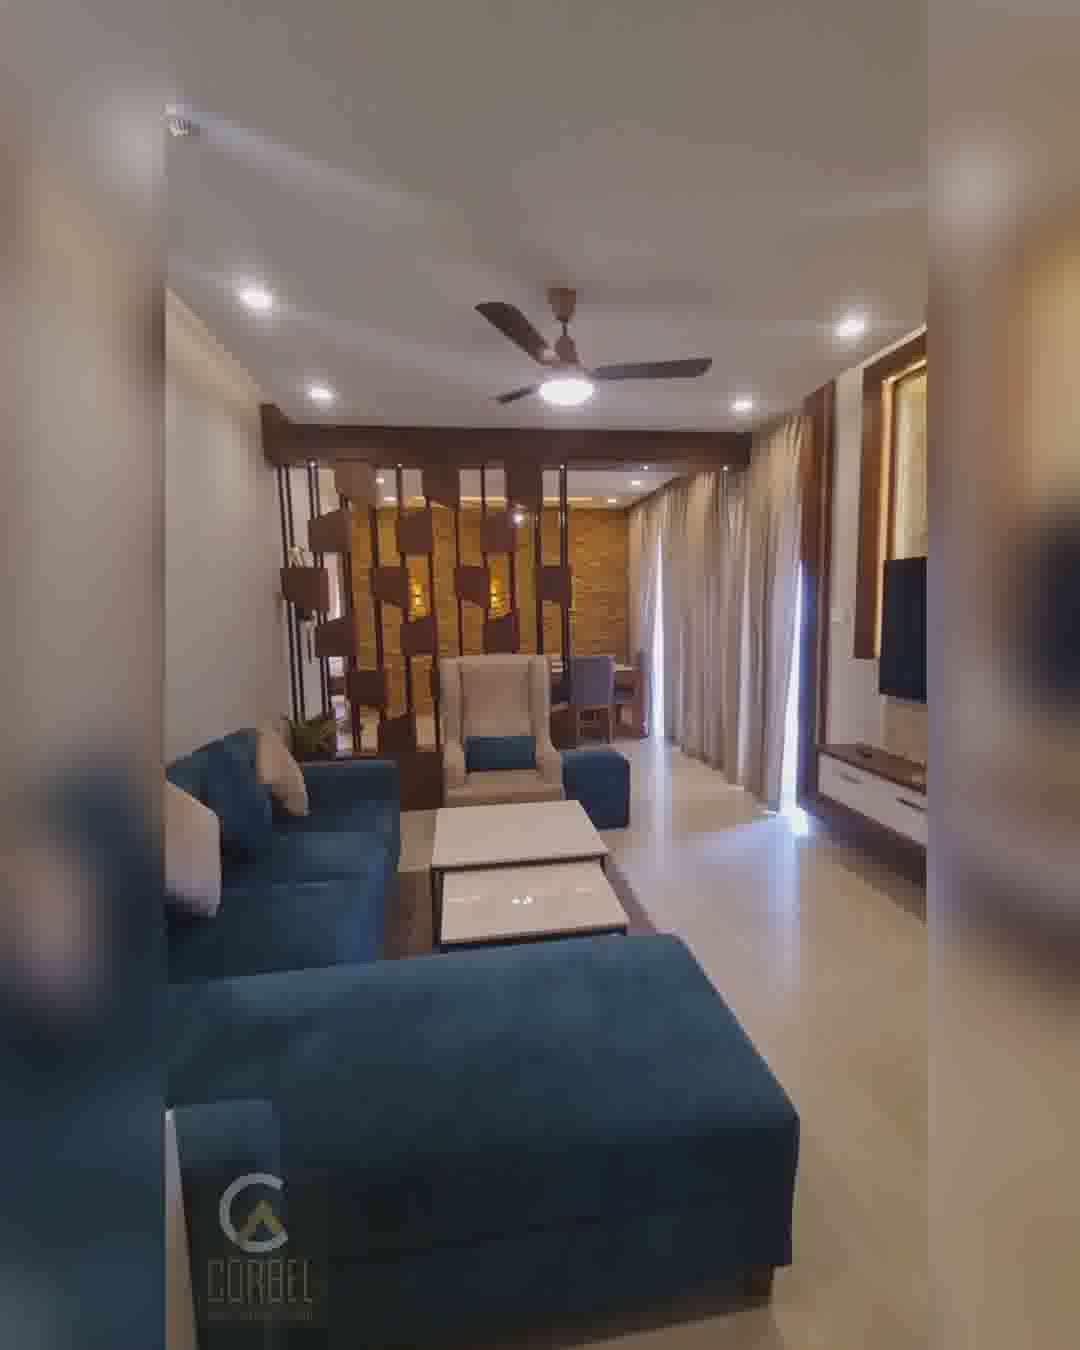 completed interior art galaxy apartment Calicut

#interiorarchitecture #interiordesign  #Architect #calicut #KeralaStyleHouse #flats #LivingroomDesigns #DiningTable